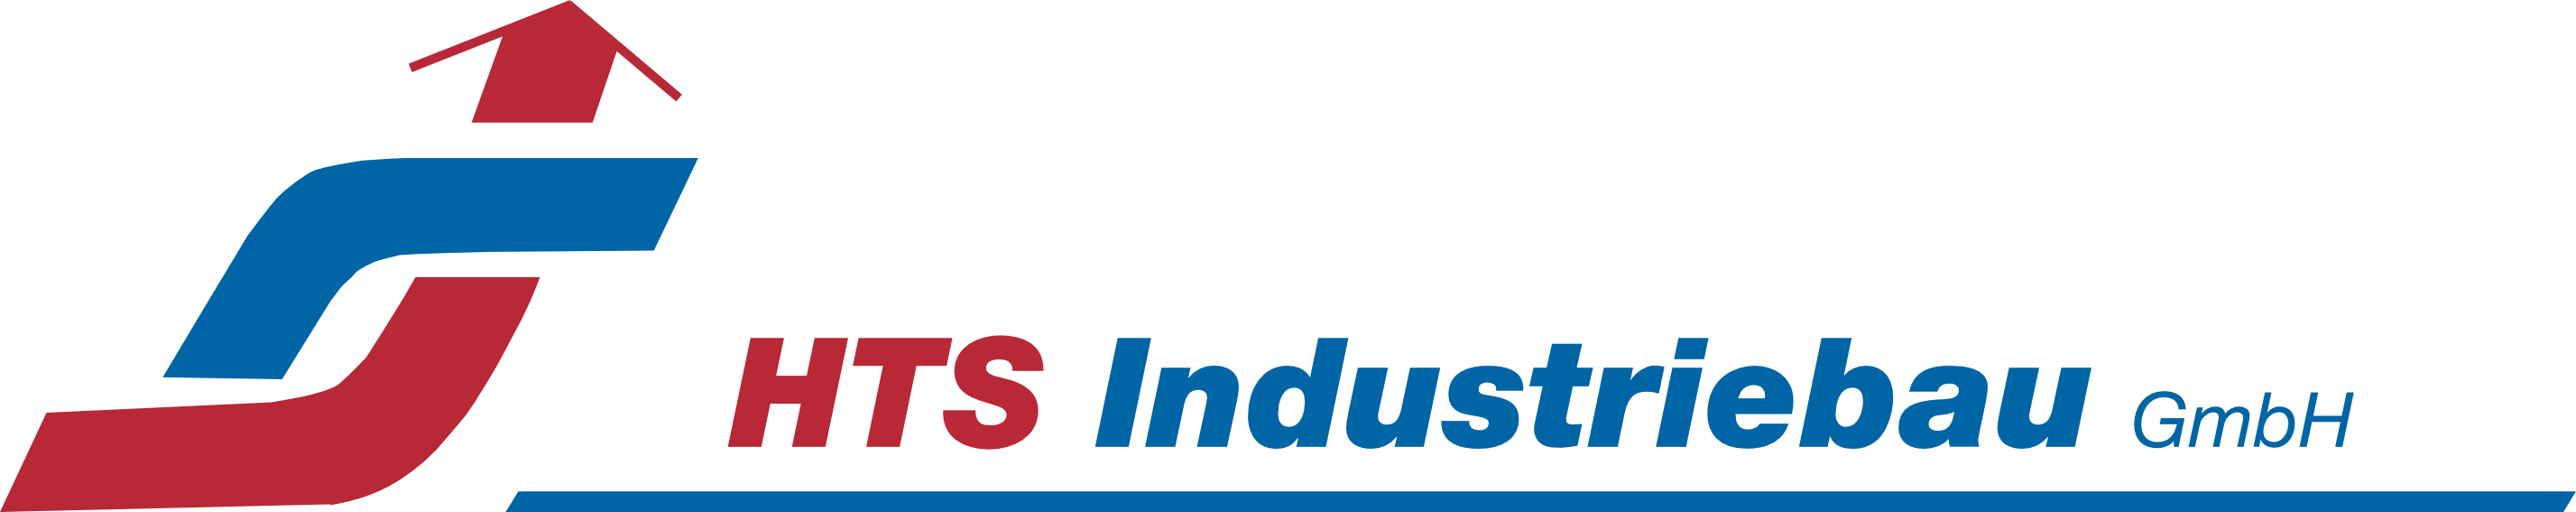 HTS Industriebau GmbH